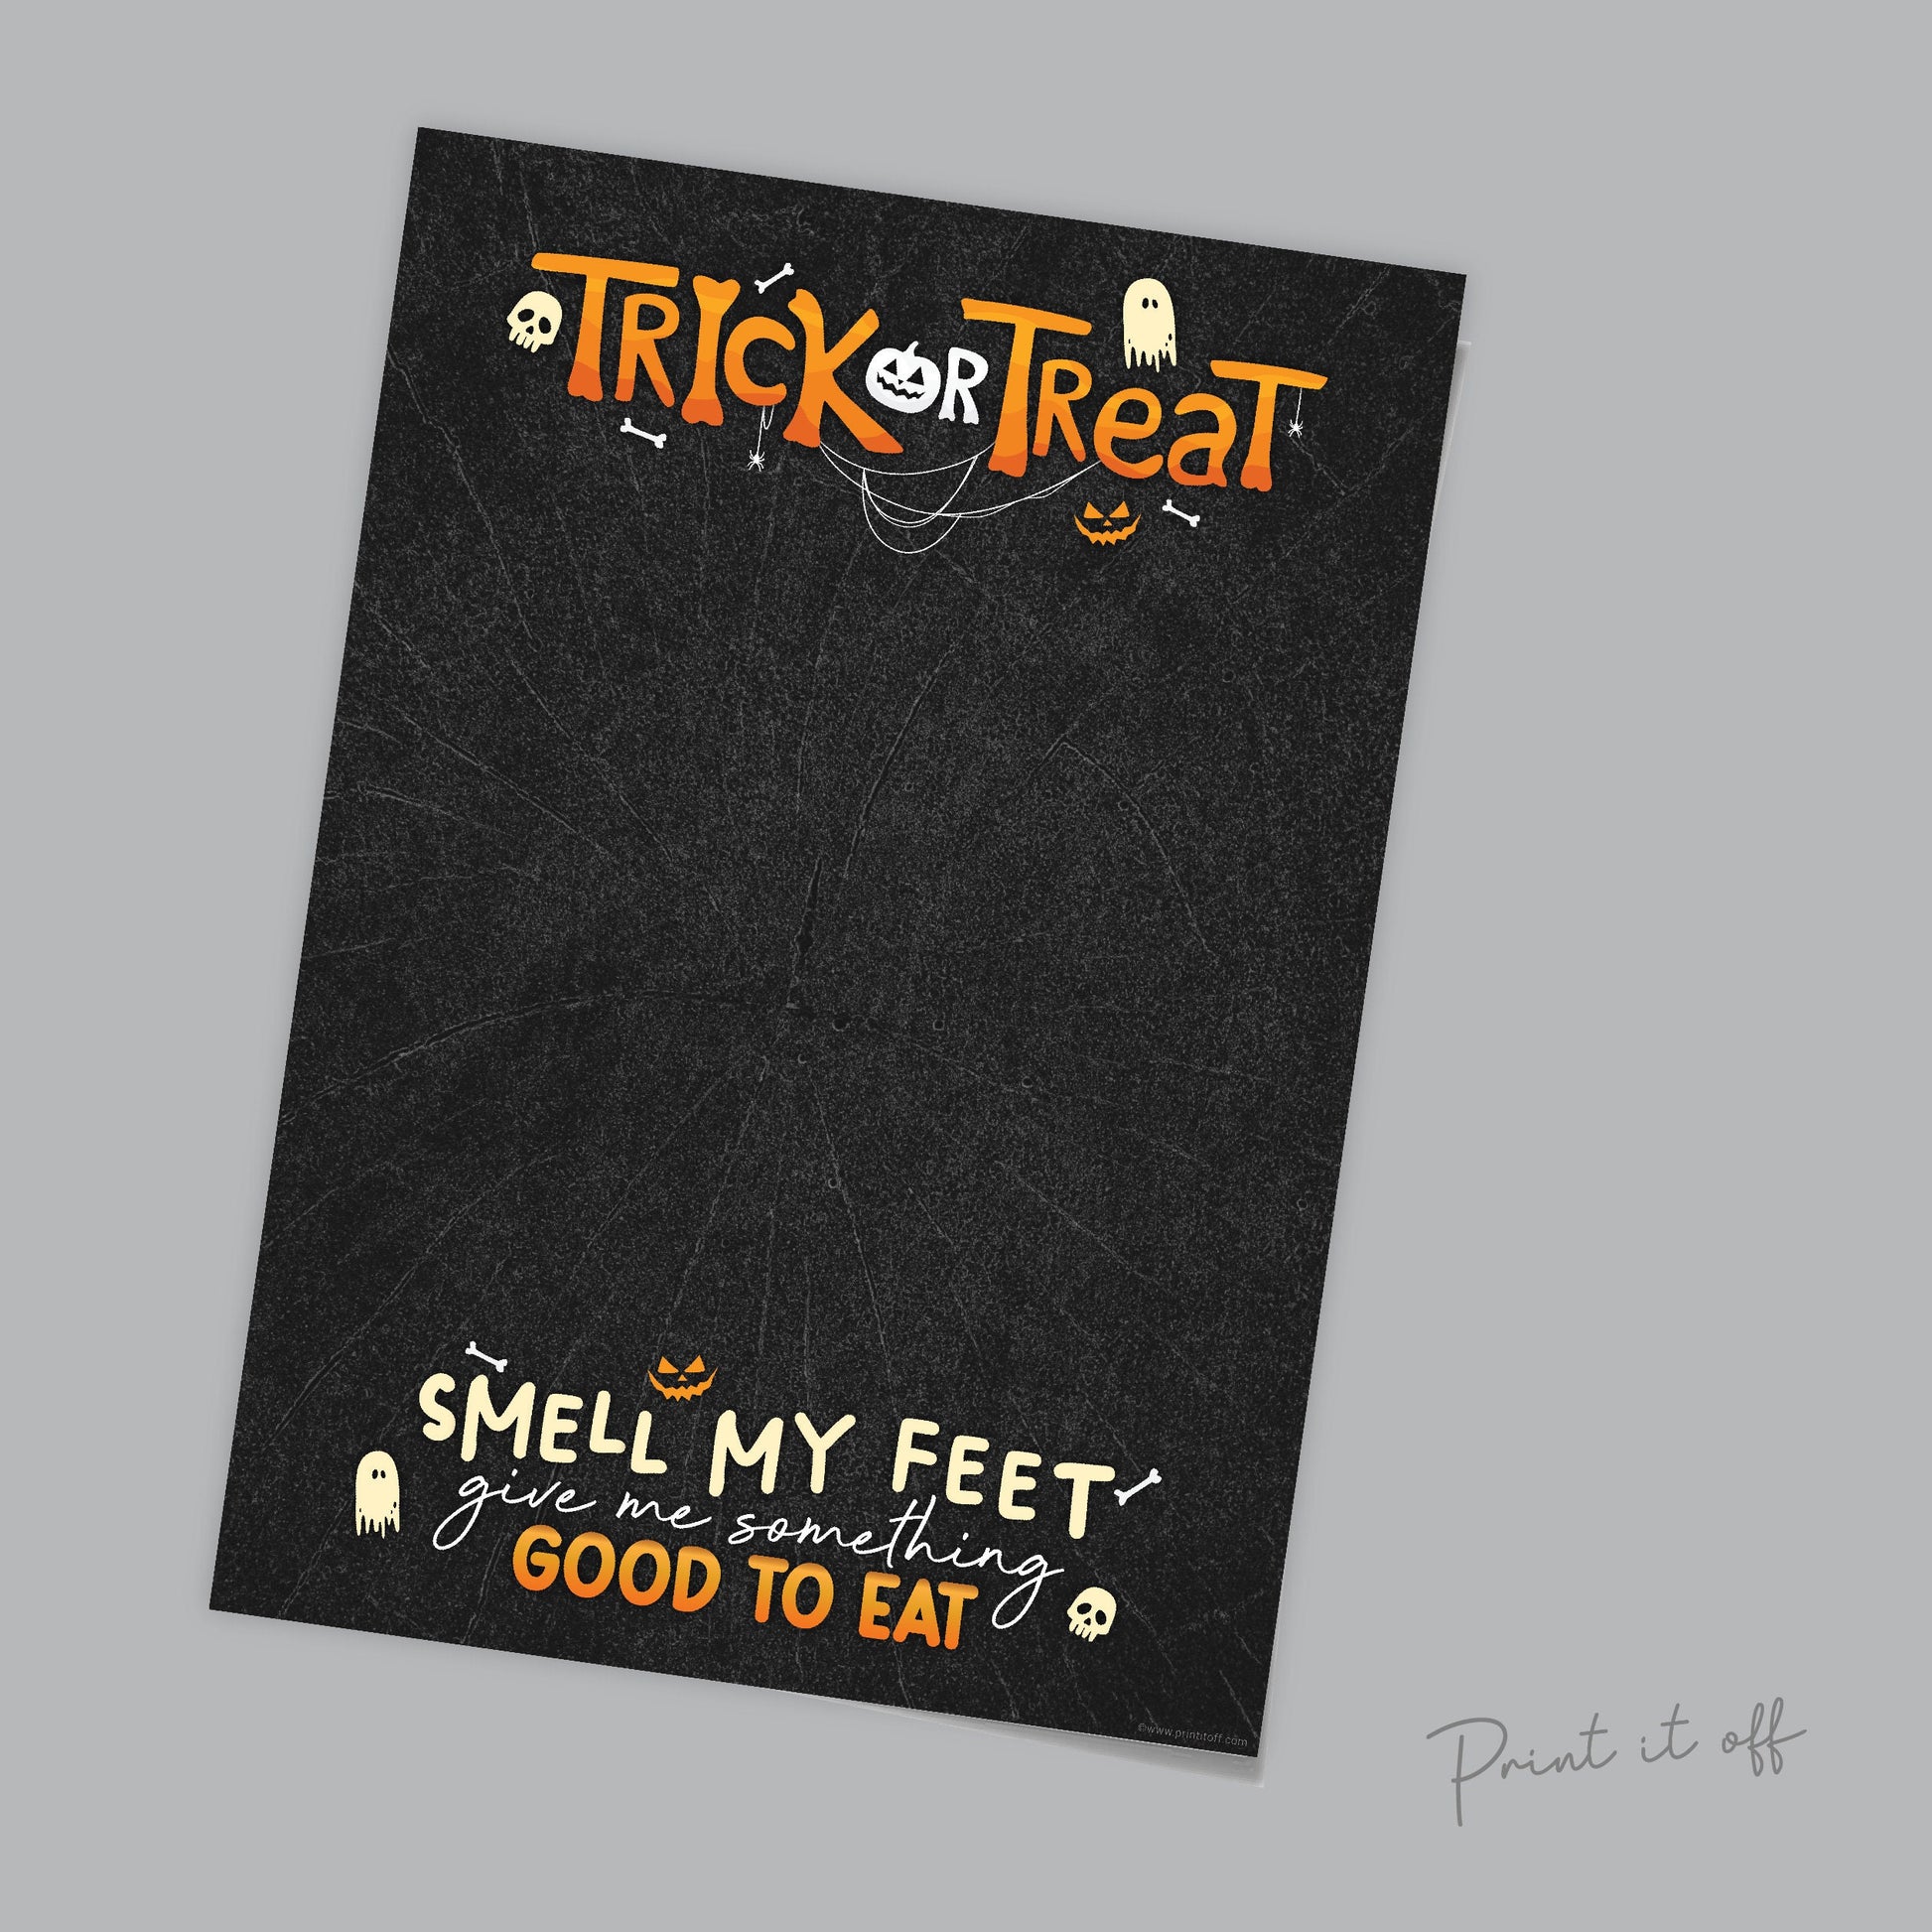 Trick or Treat Halloween Footprint Handprint Art Craft / Kids Toddler Baby Card Memory Activity Decoration Keepsake / Print It Off 0586